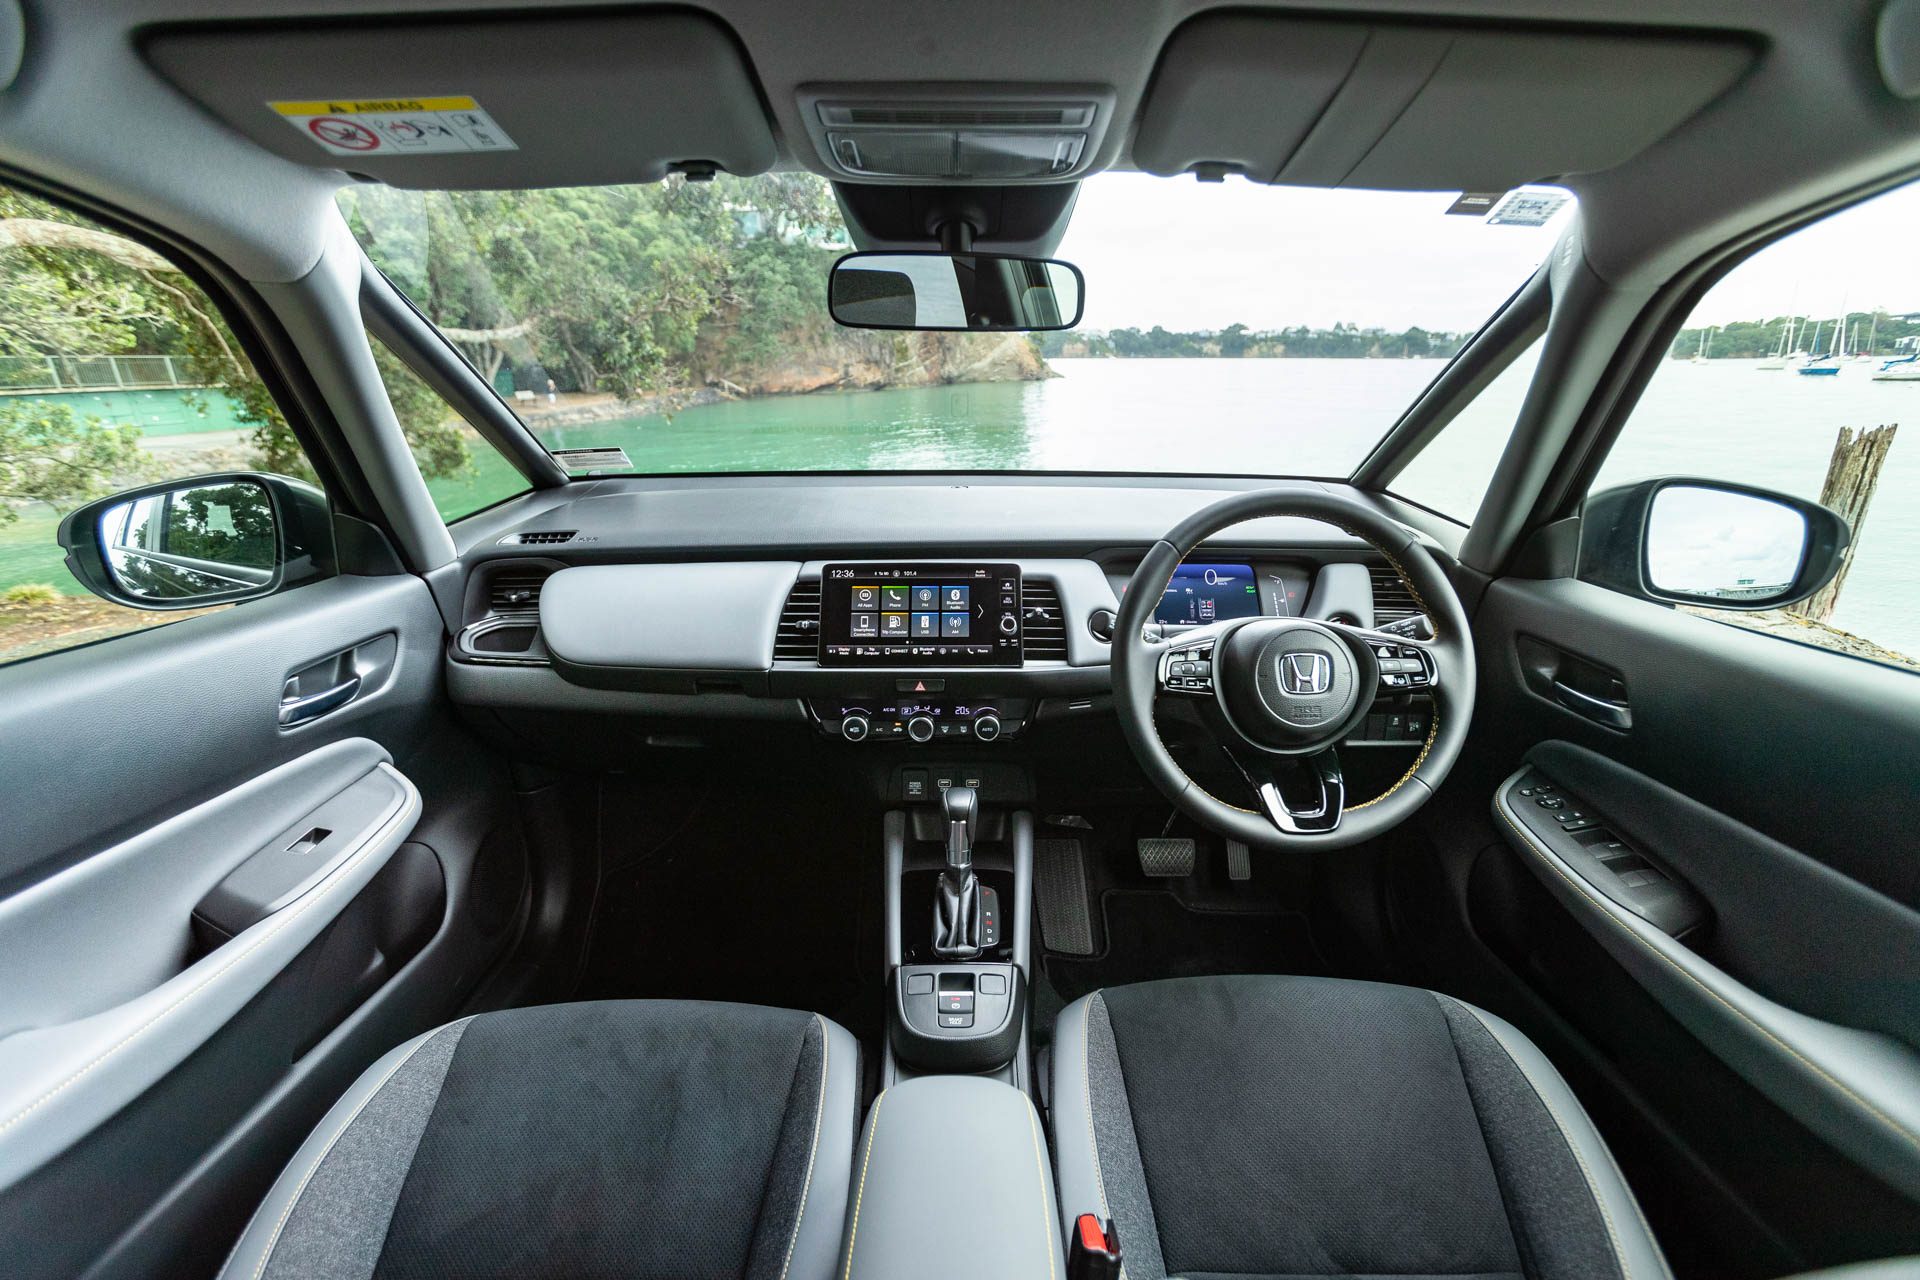 Honda Jazz RS 2023 Front Interior and Dash